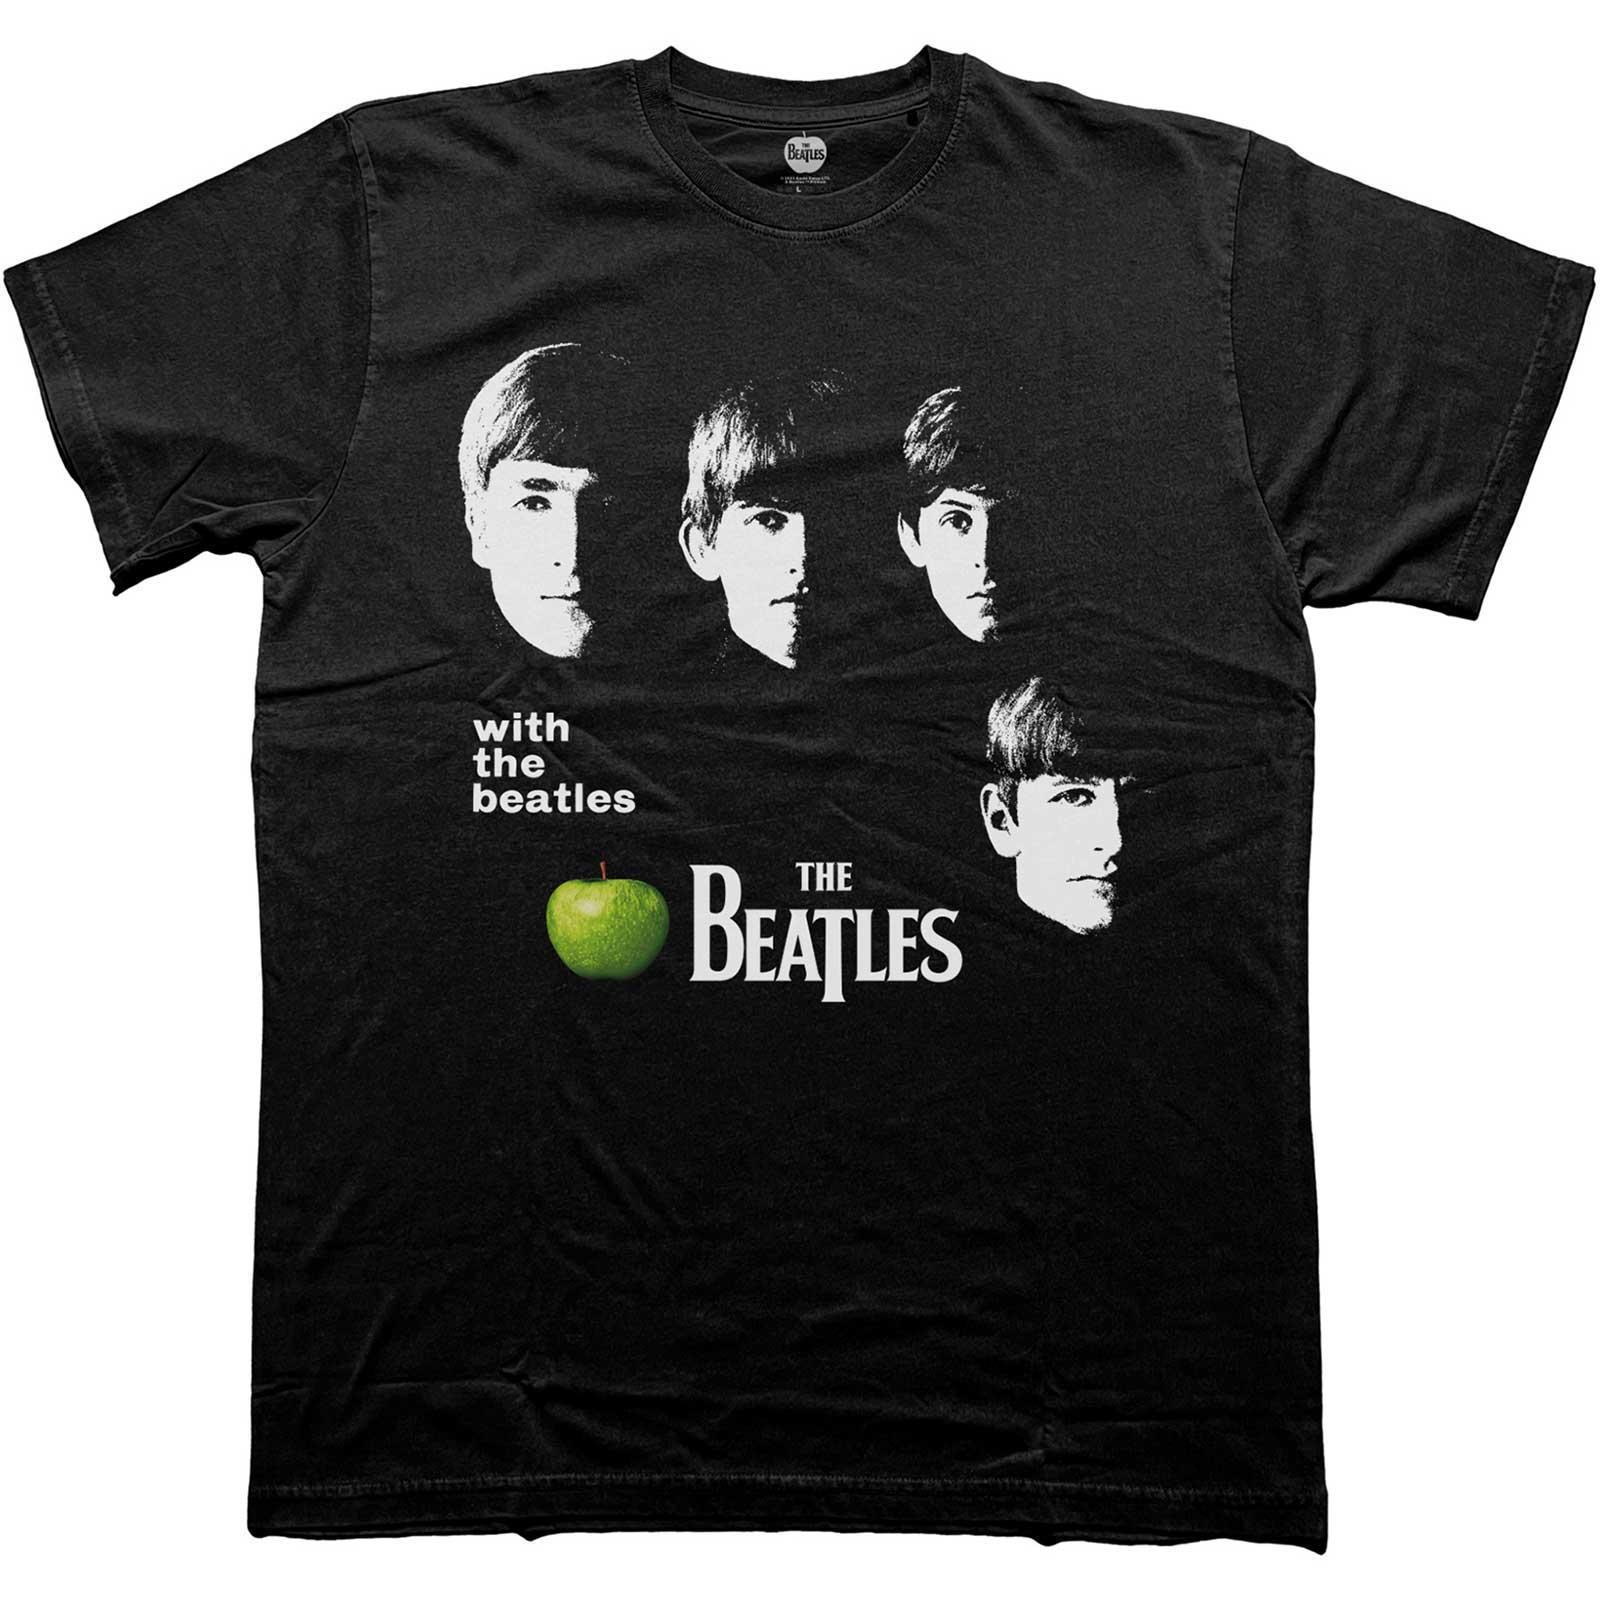 The Beatles Unisex Adult We The Beatles Apple Cotton T-Shirt (Black) (XL)